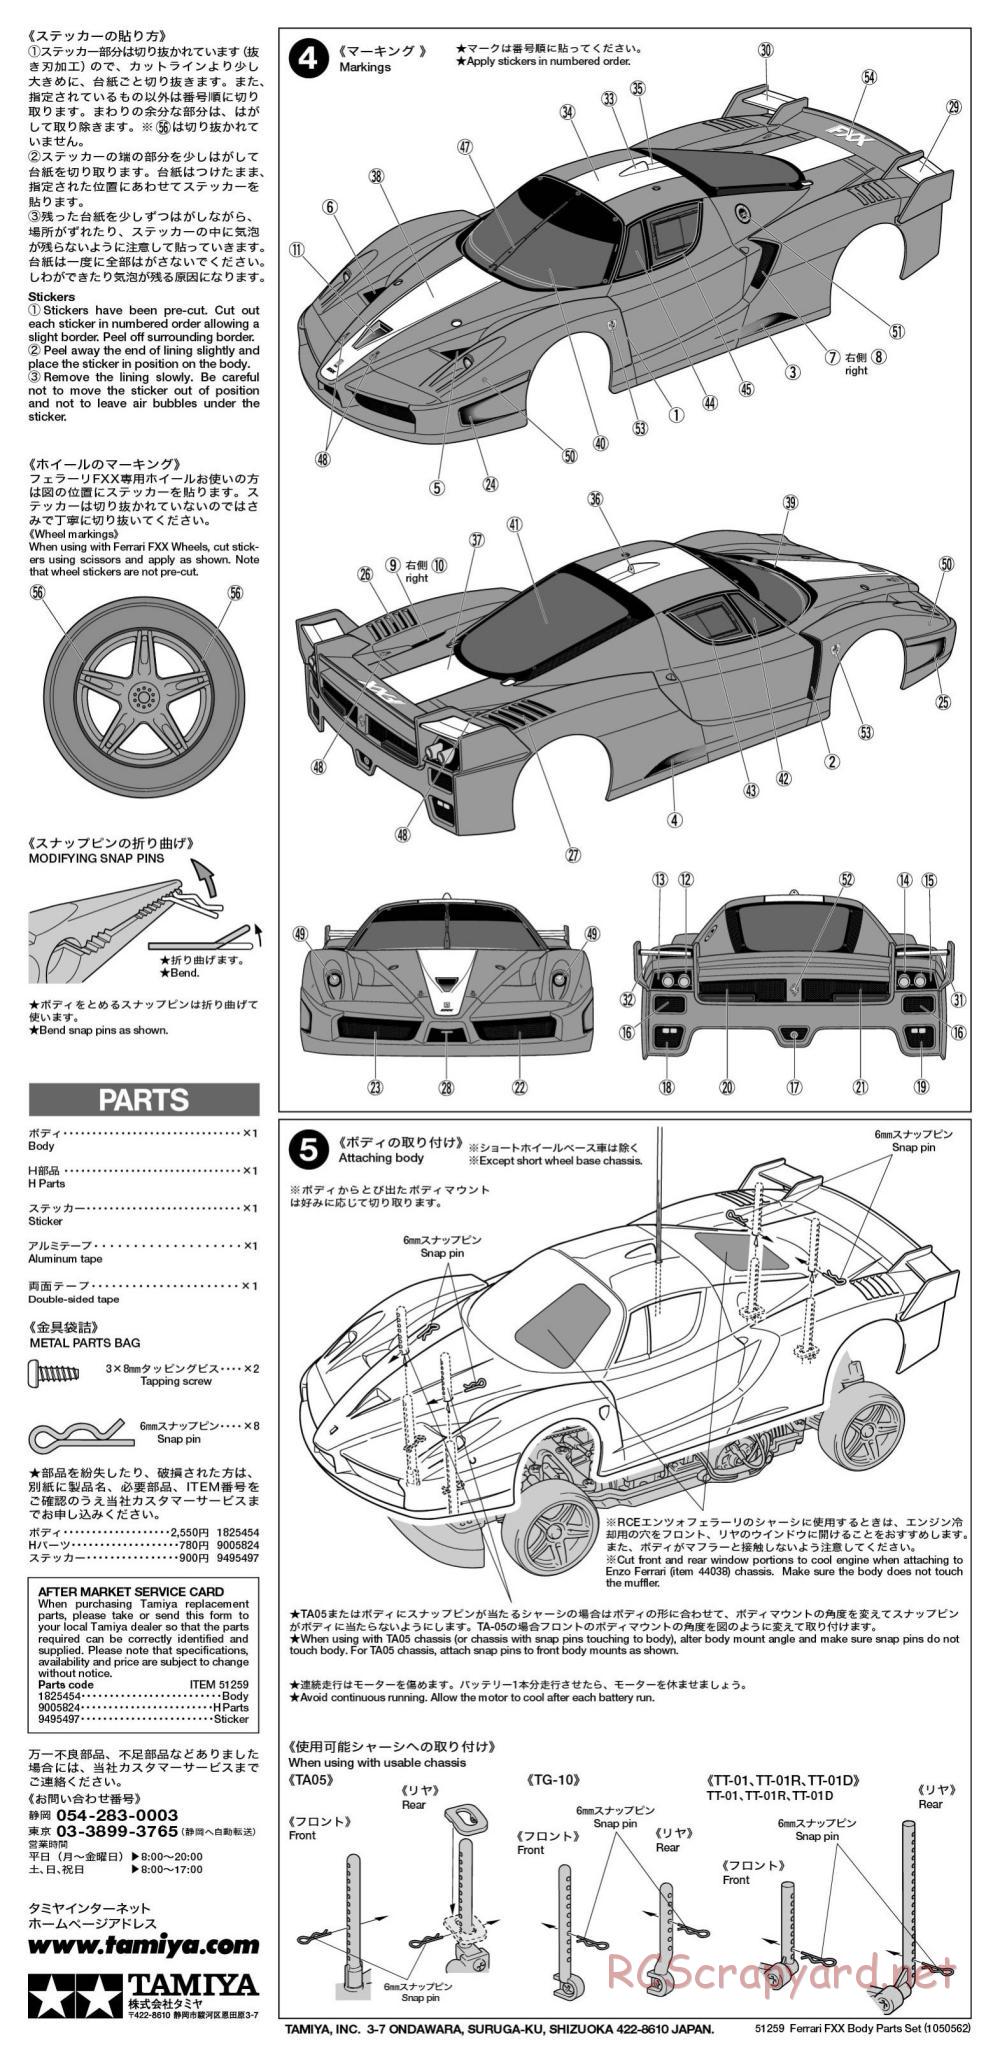 Tamiya - Ferrari FXX - TA05 Chassis - Body Manual - Page 2